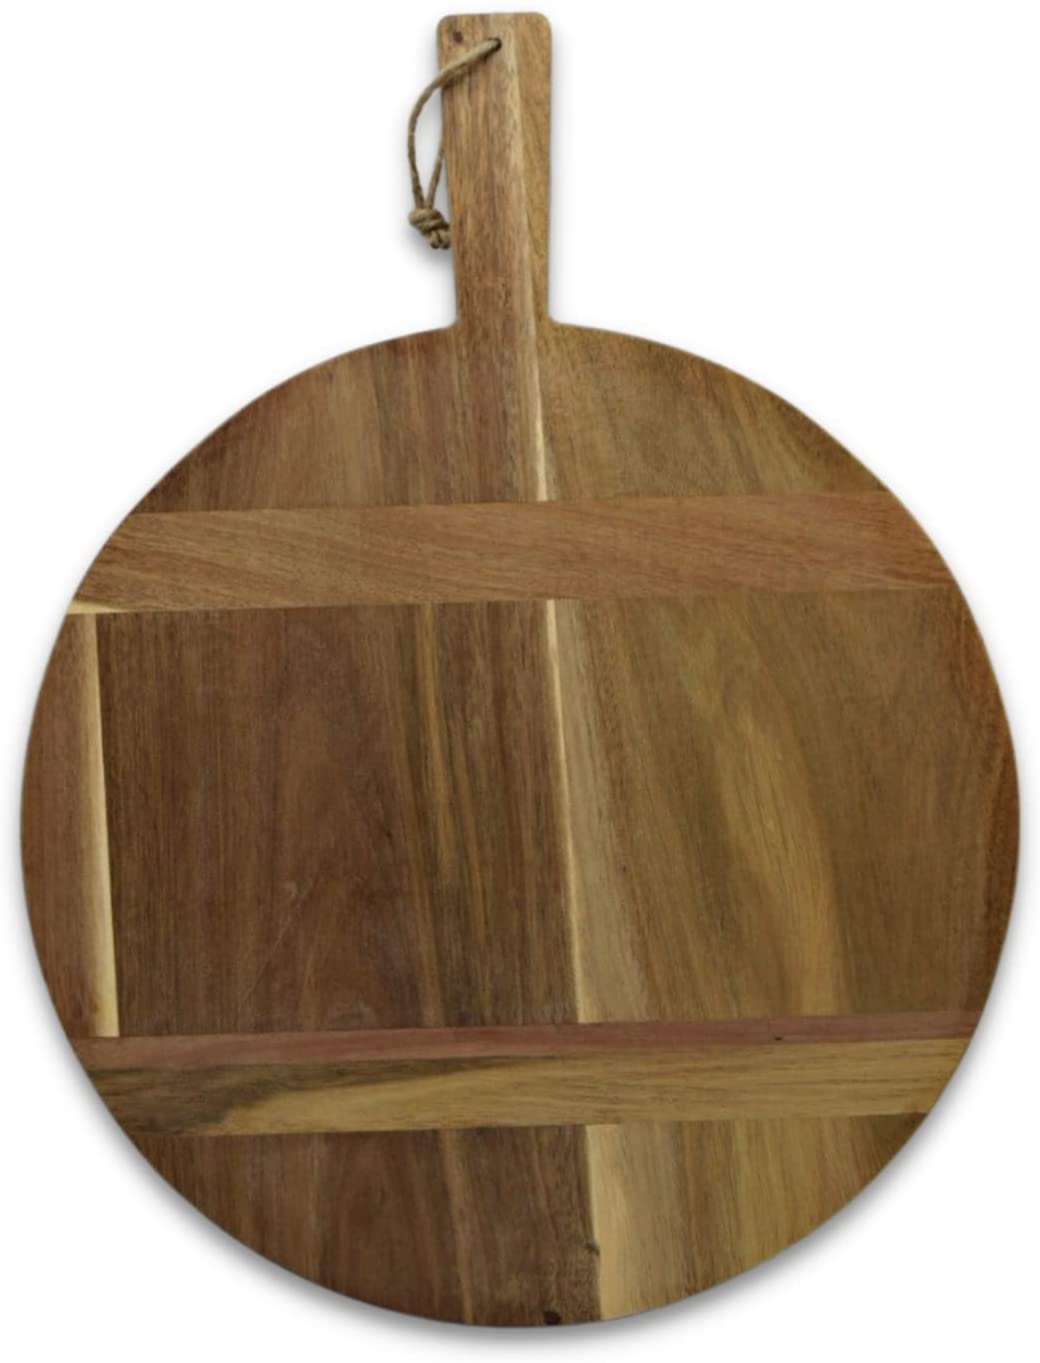 acacia wood board